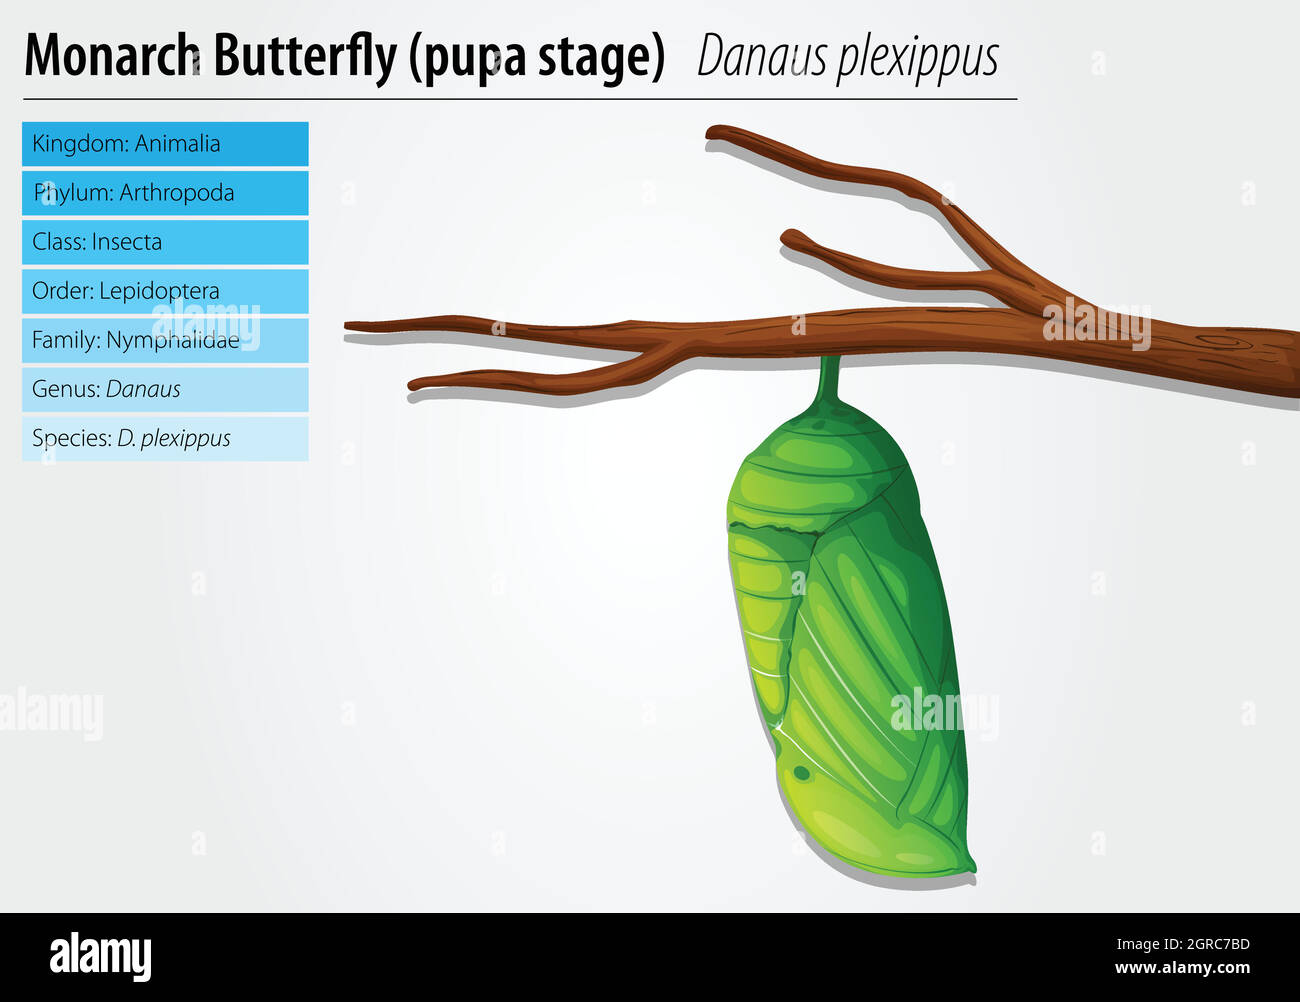 Monarch butterfly - Danaus plexippus - pupa stage Stock Vector